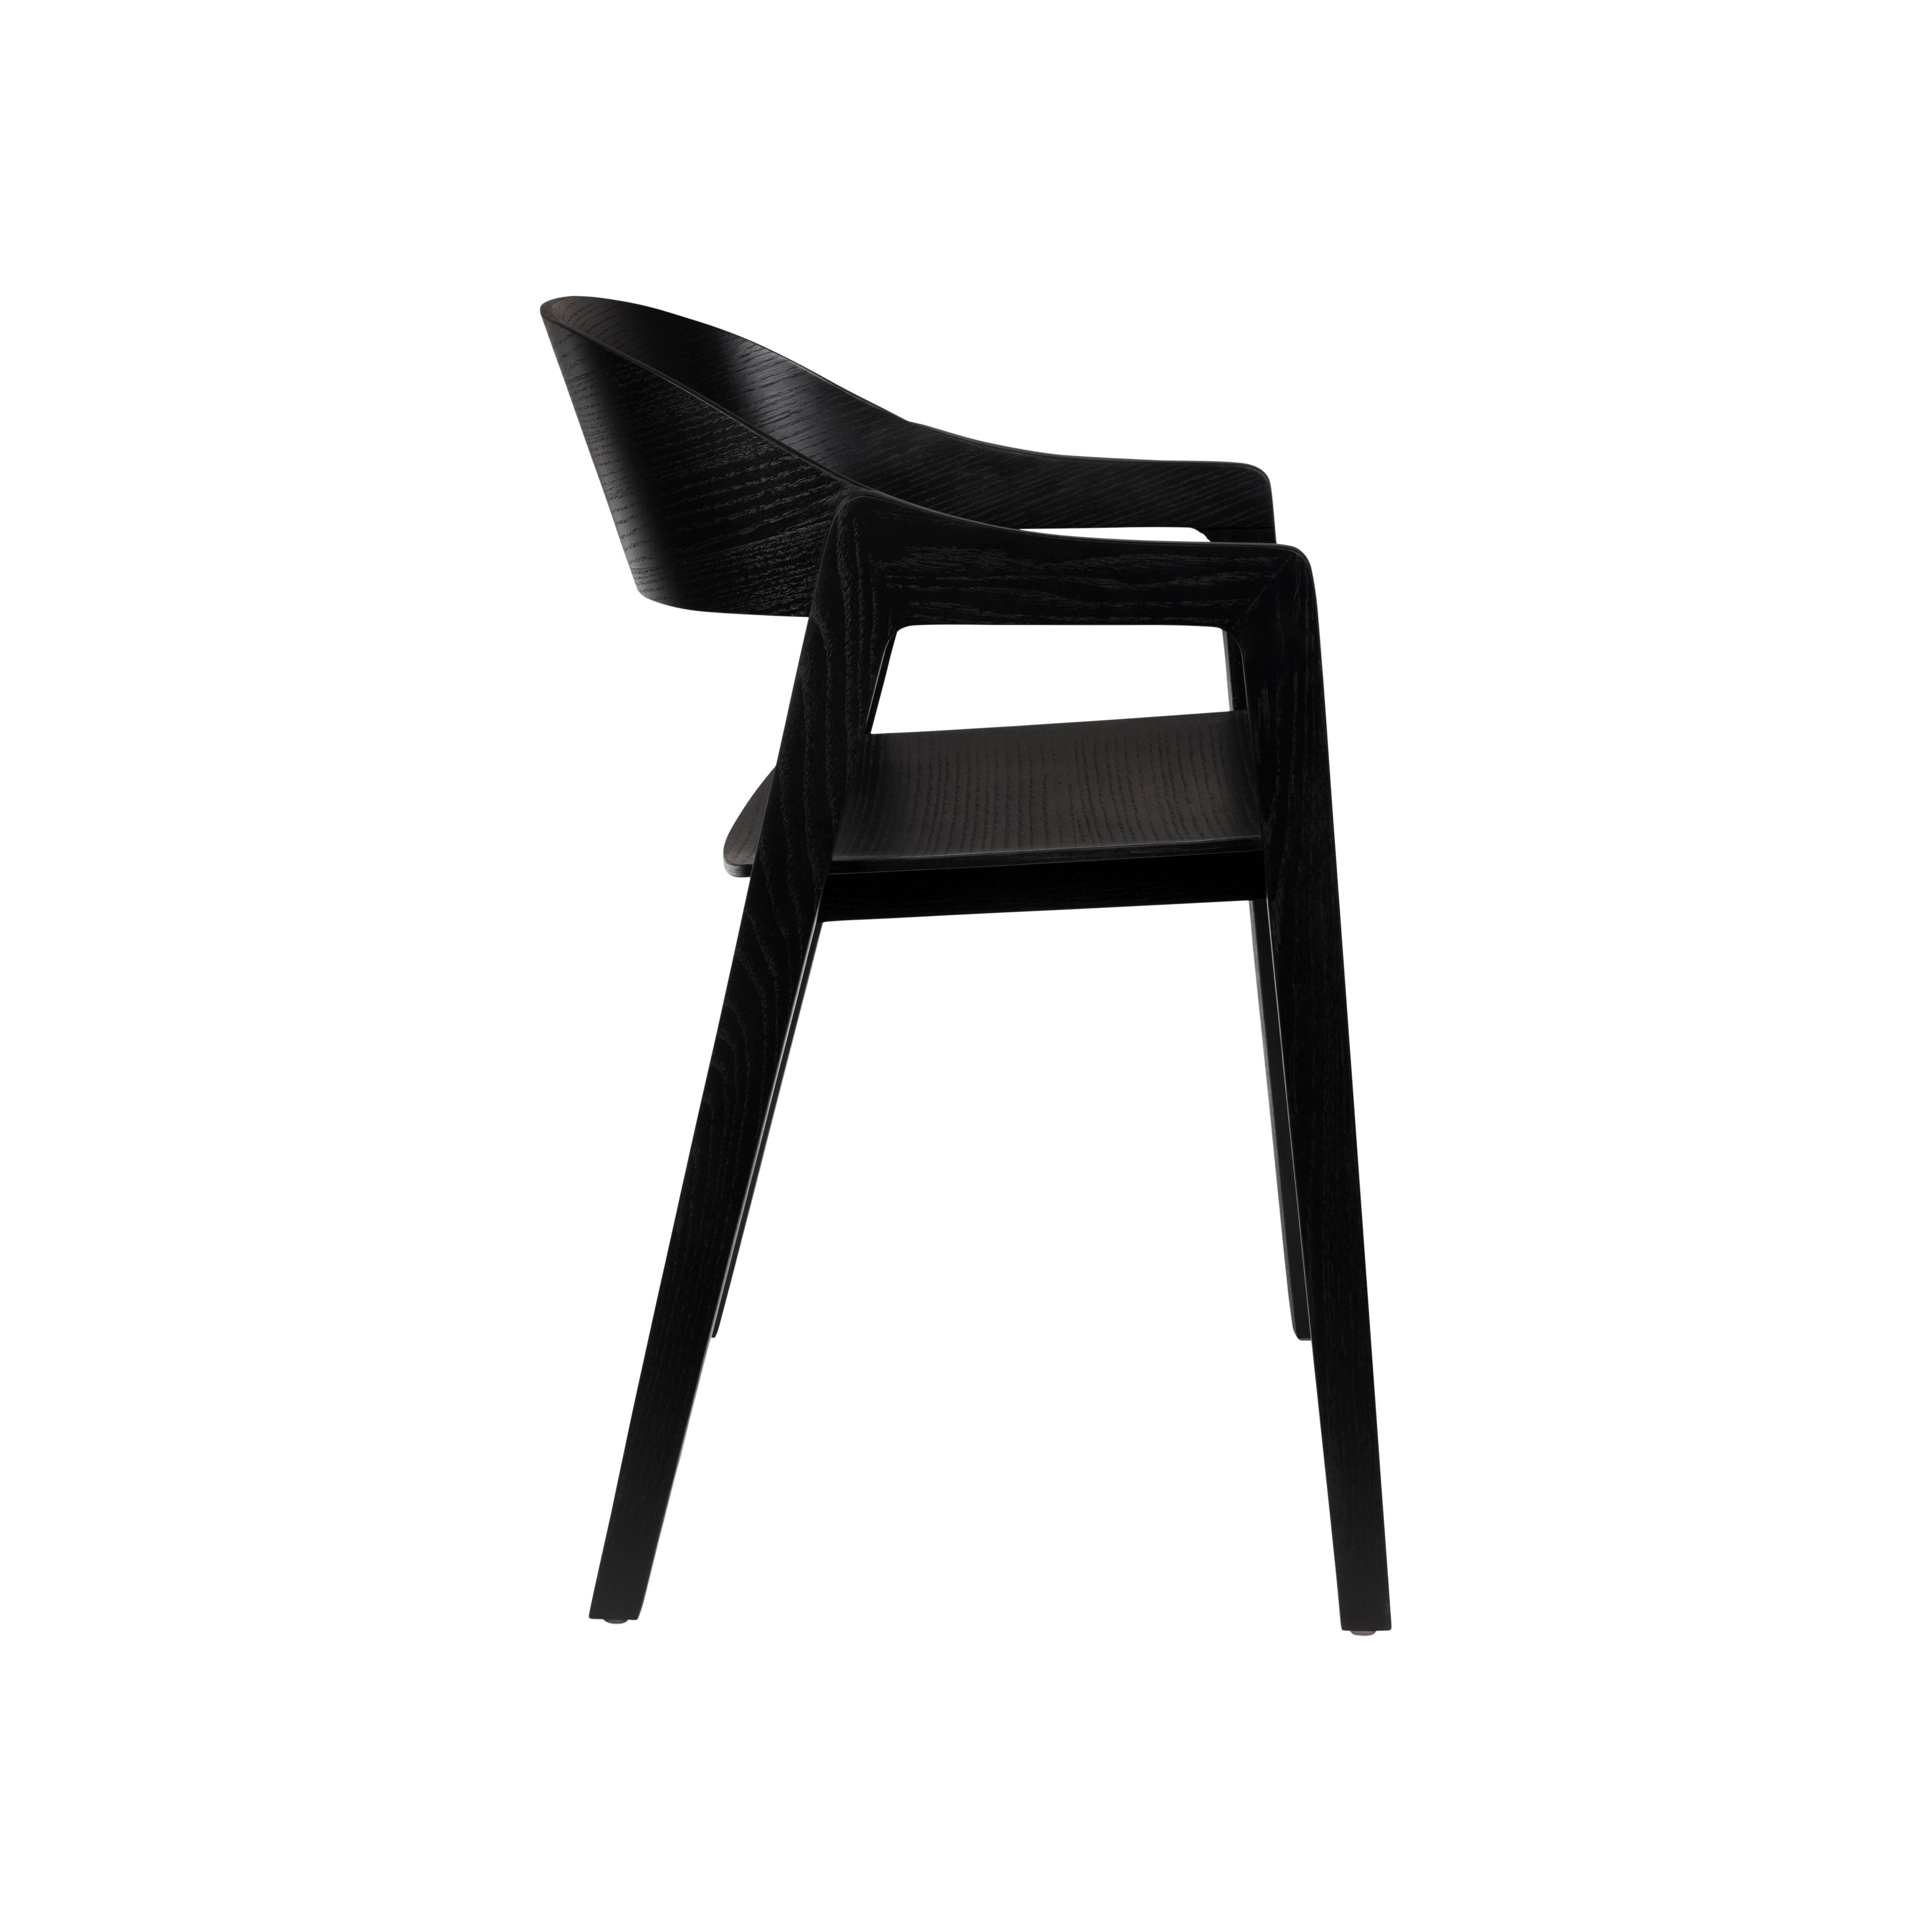 Chair westlake black